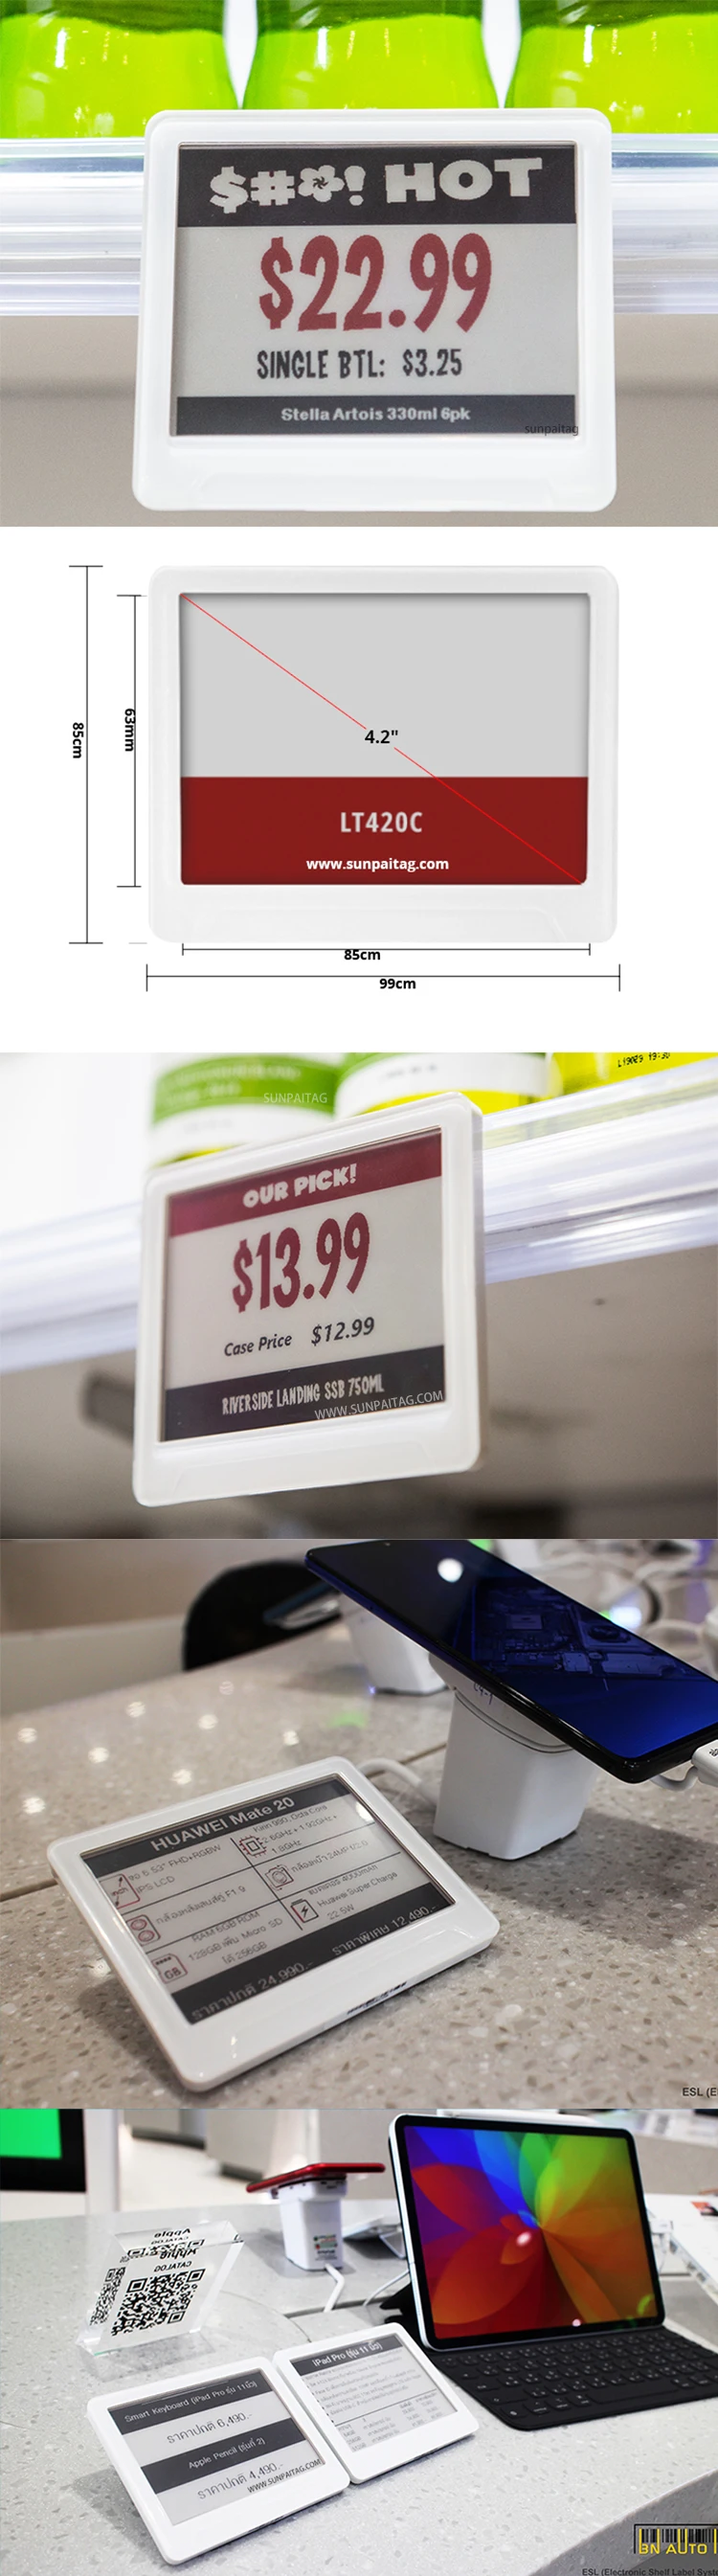 Sunpaitg 4.2インチeインクscreen Wireless Supermarket Shelf Digital Label